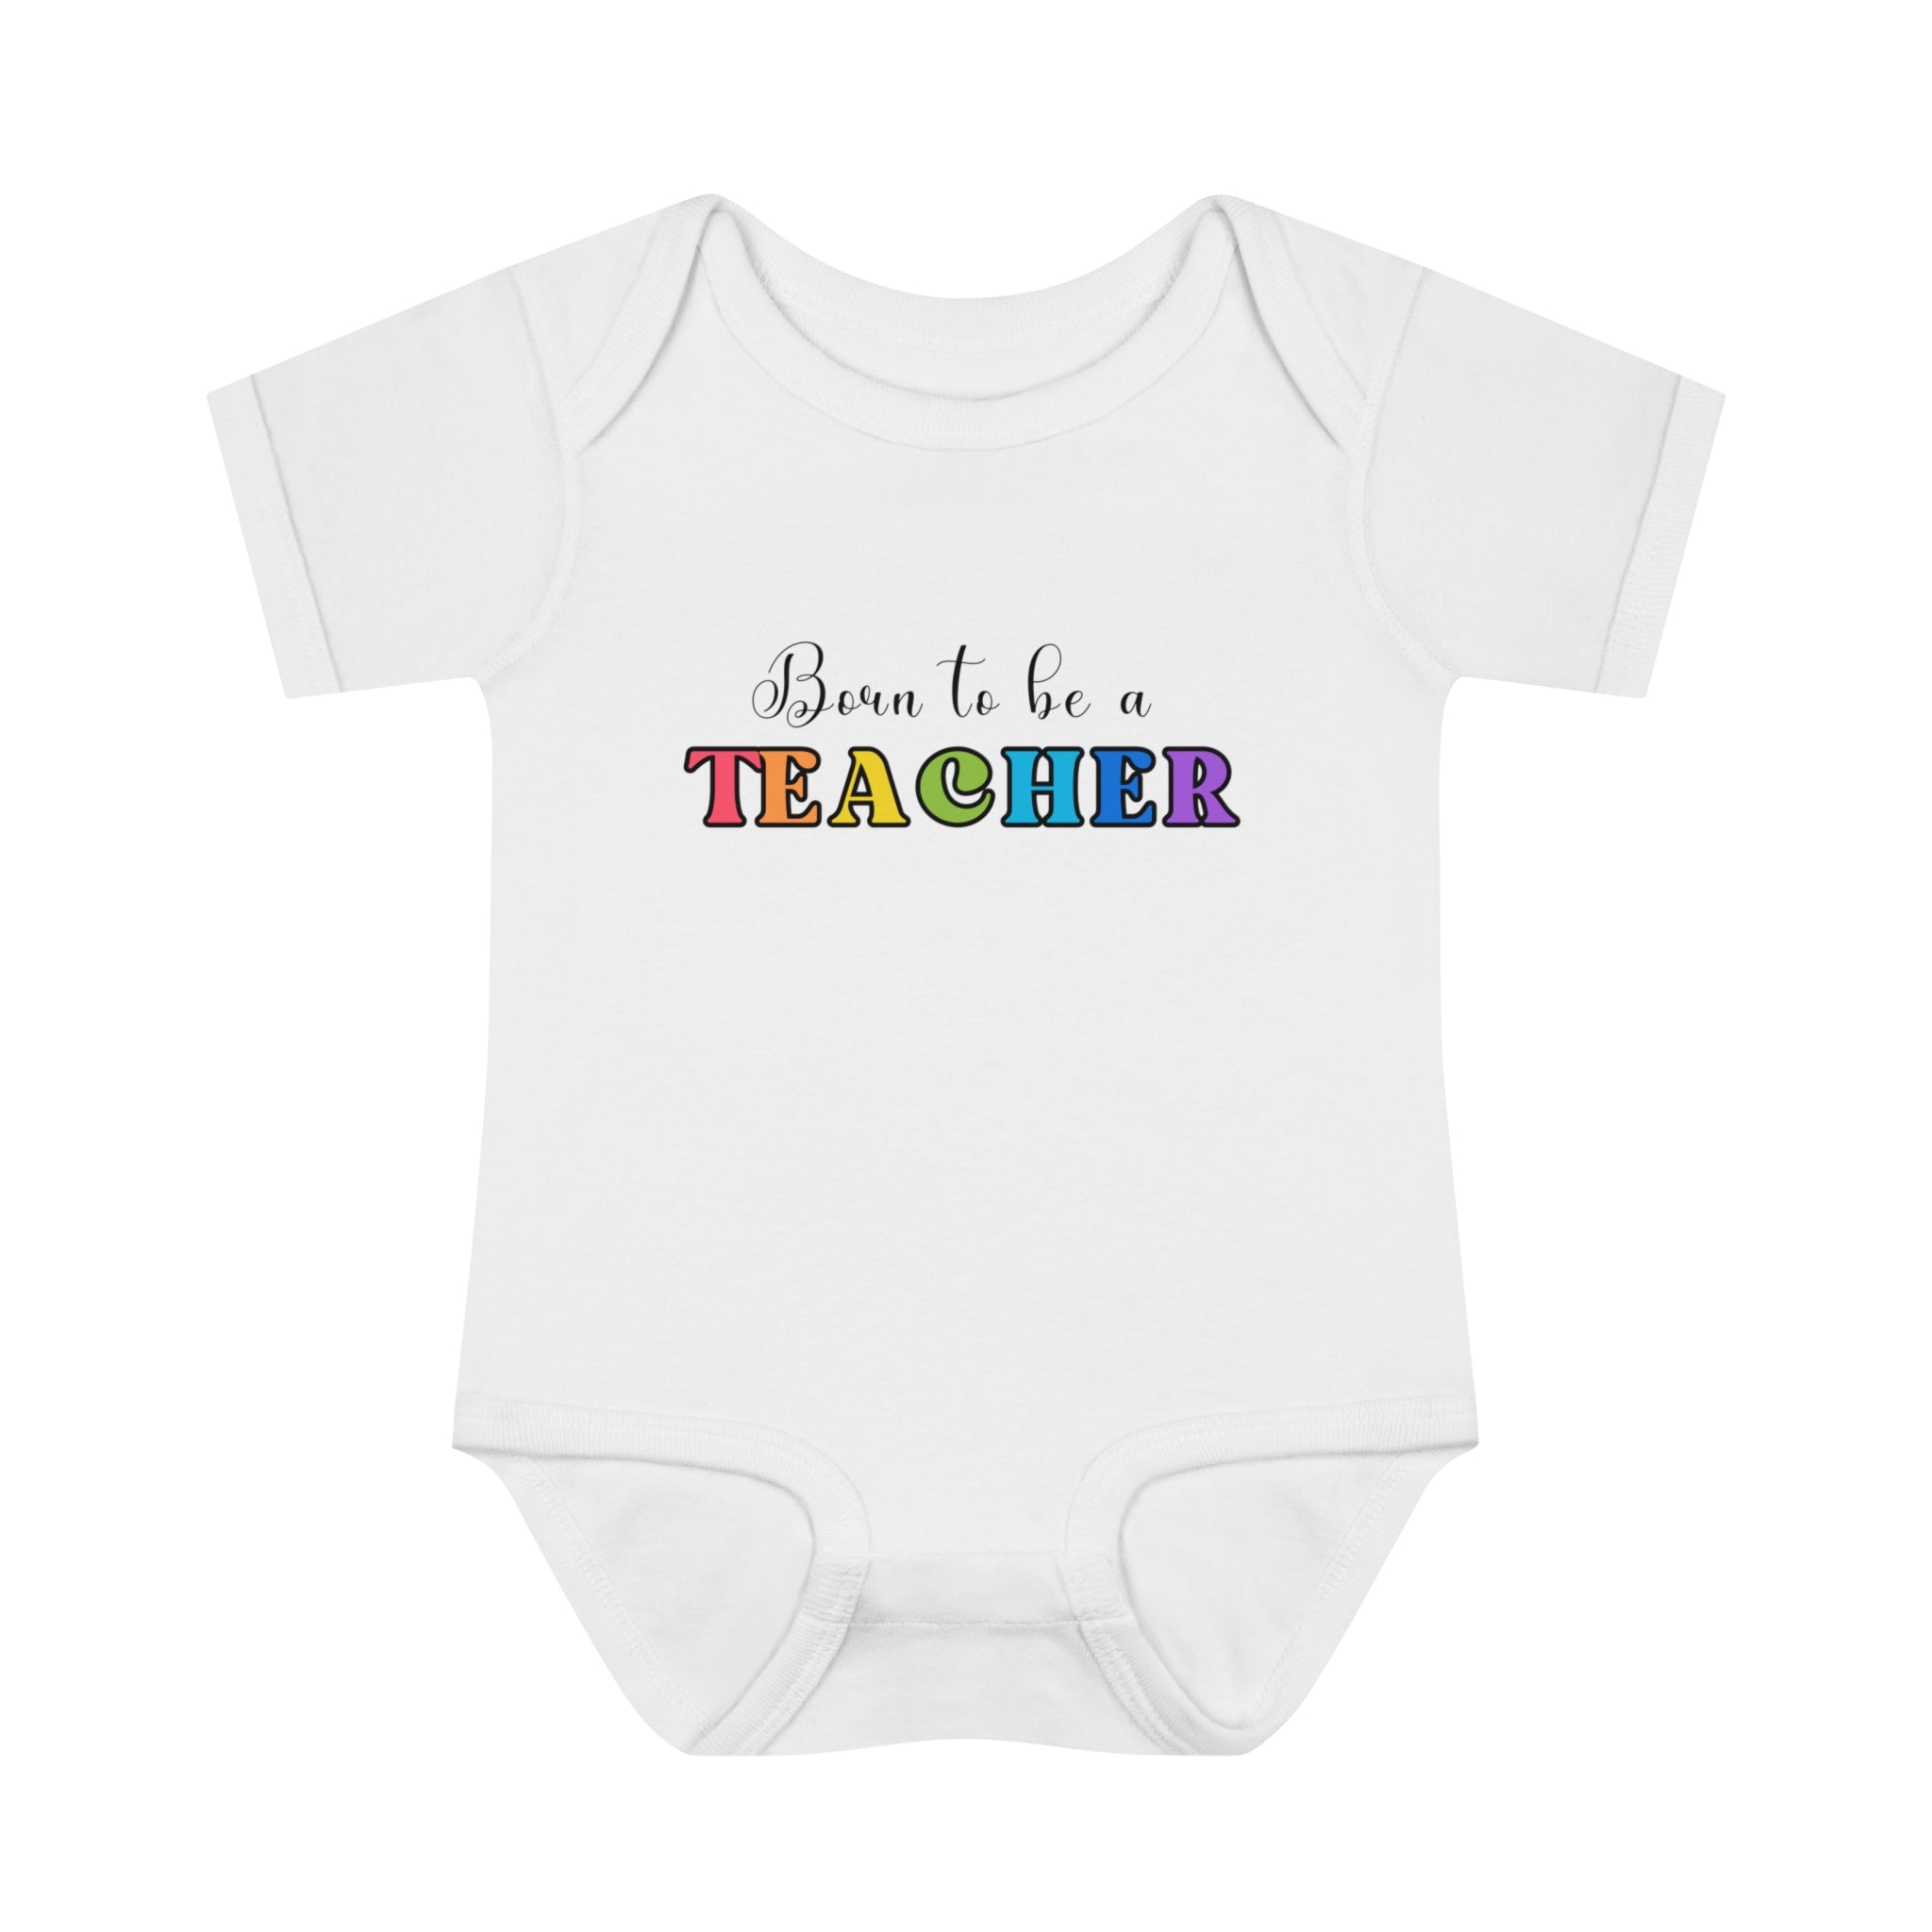 Born to be a teacher Baby Bodysuit